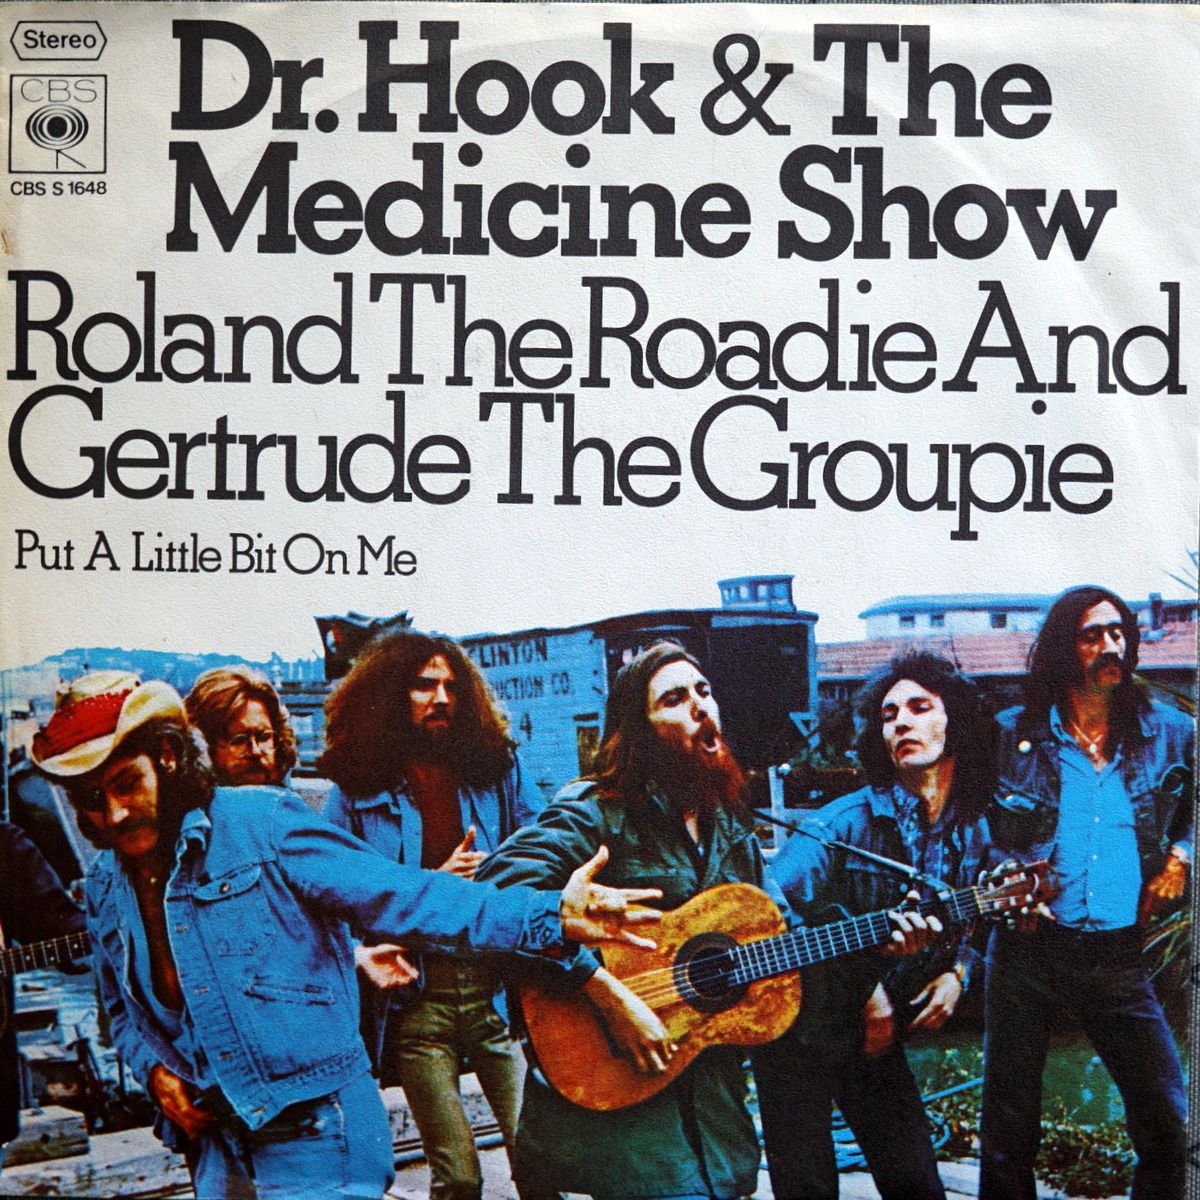 S BU B3 - CBS 1648 - Ronald The Roadie And Gertrude The Groupie - 1973